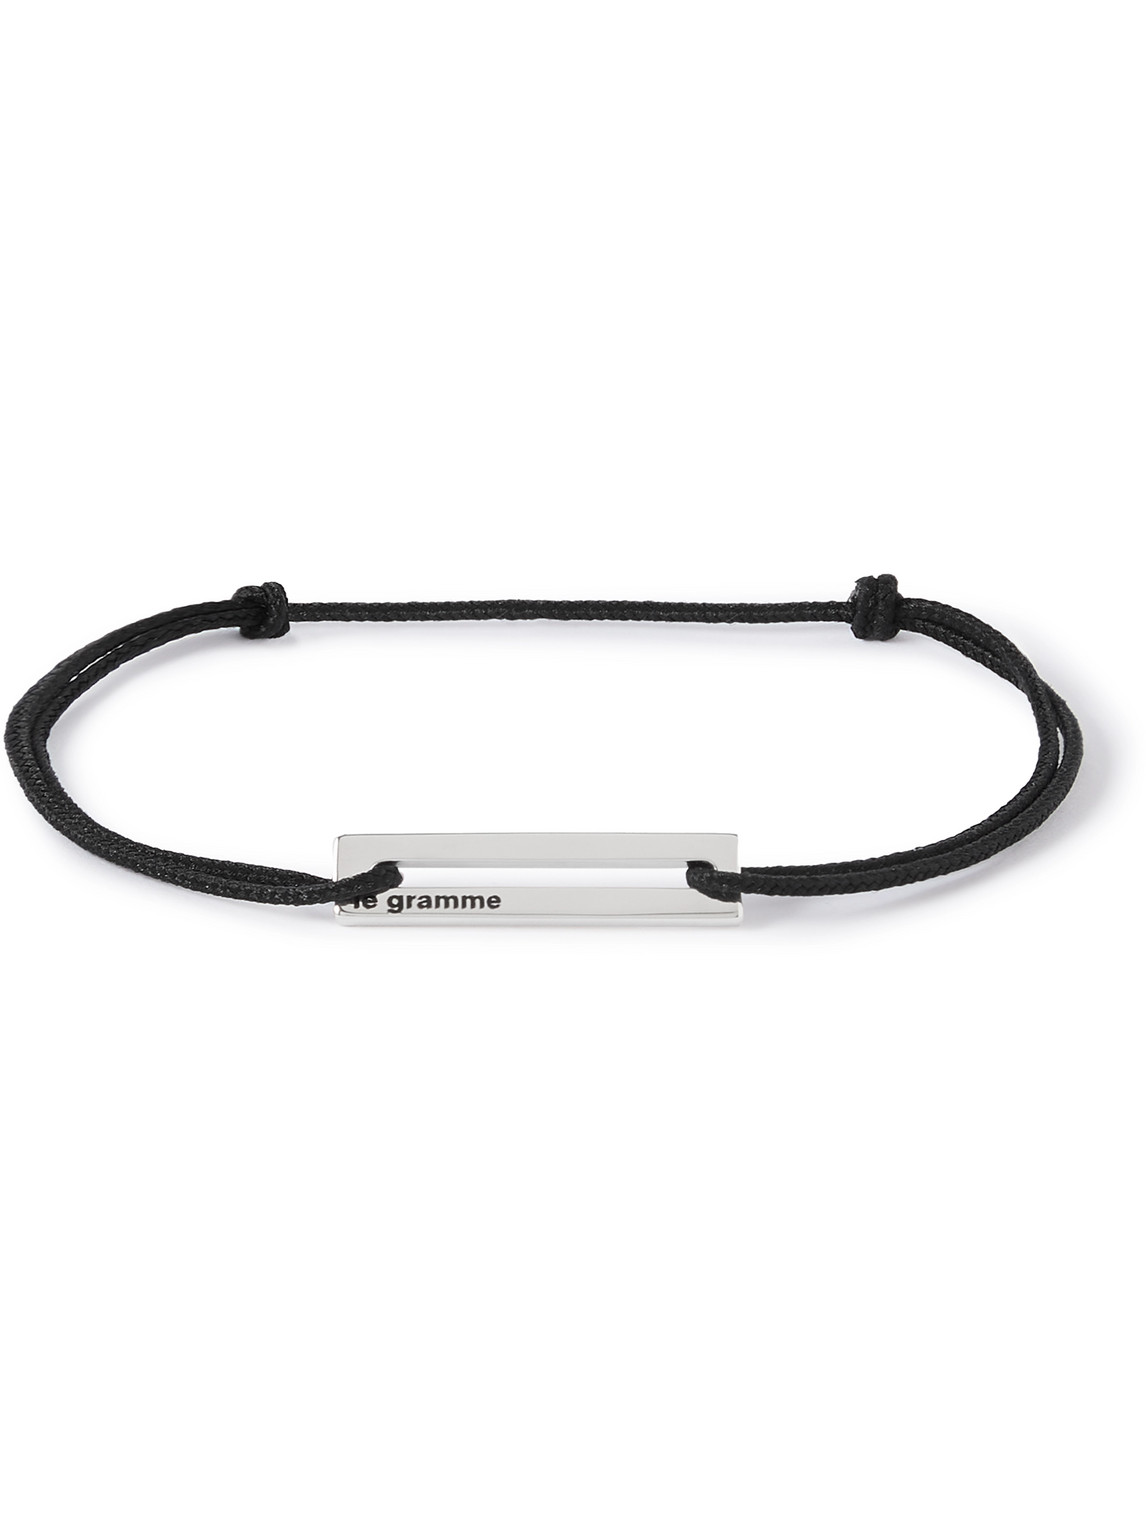 Le Gramme 1.7g Silver Cord Bracelet In Black